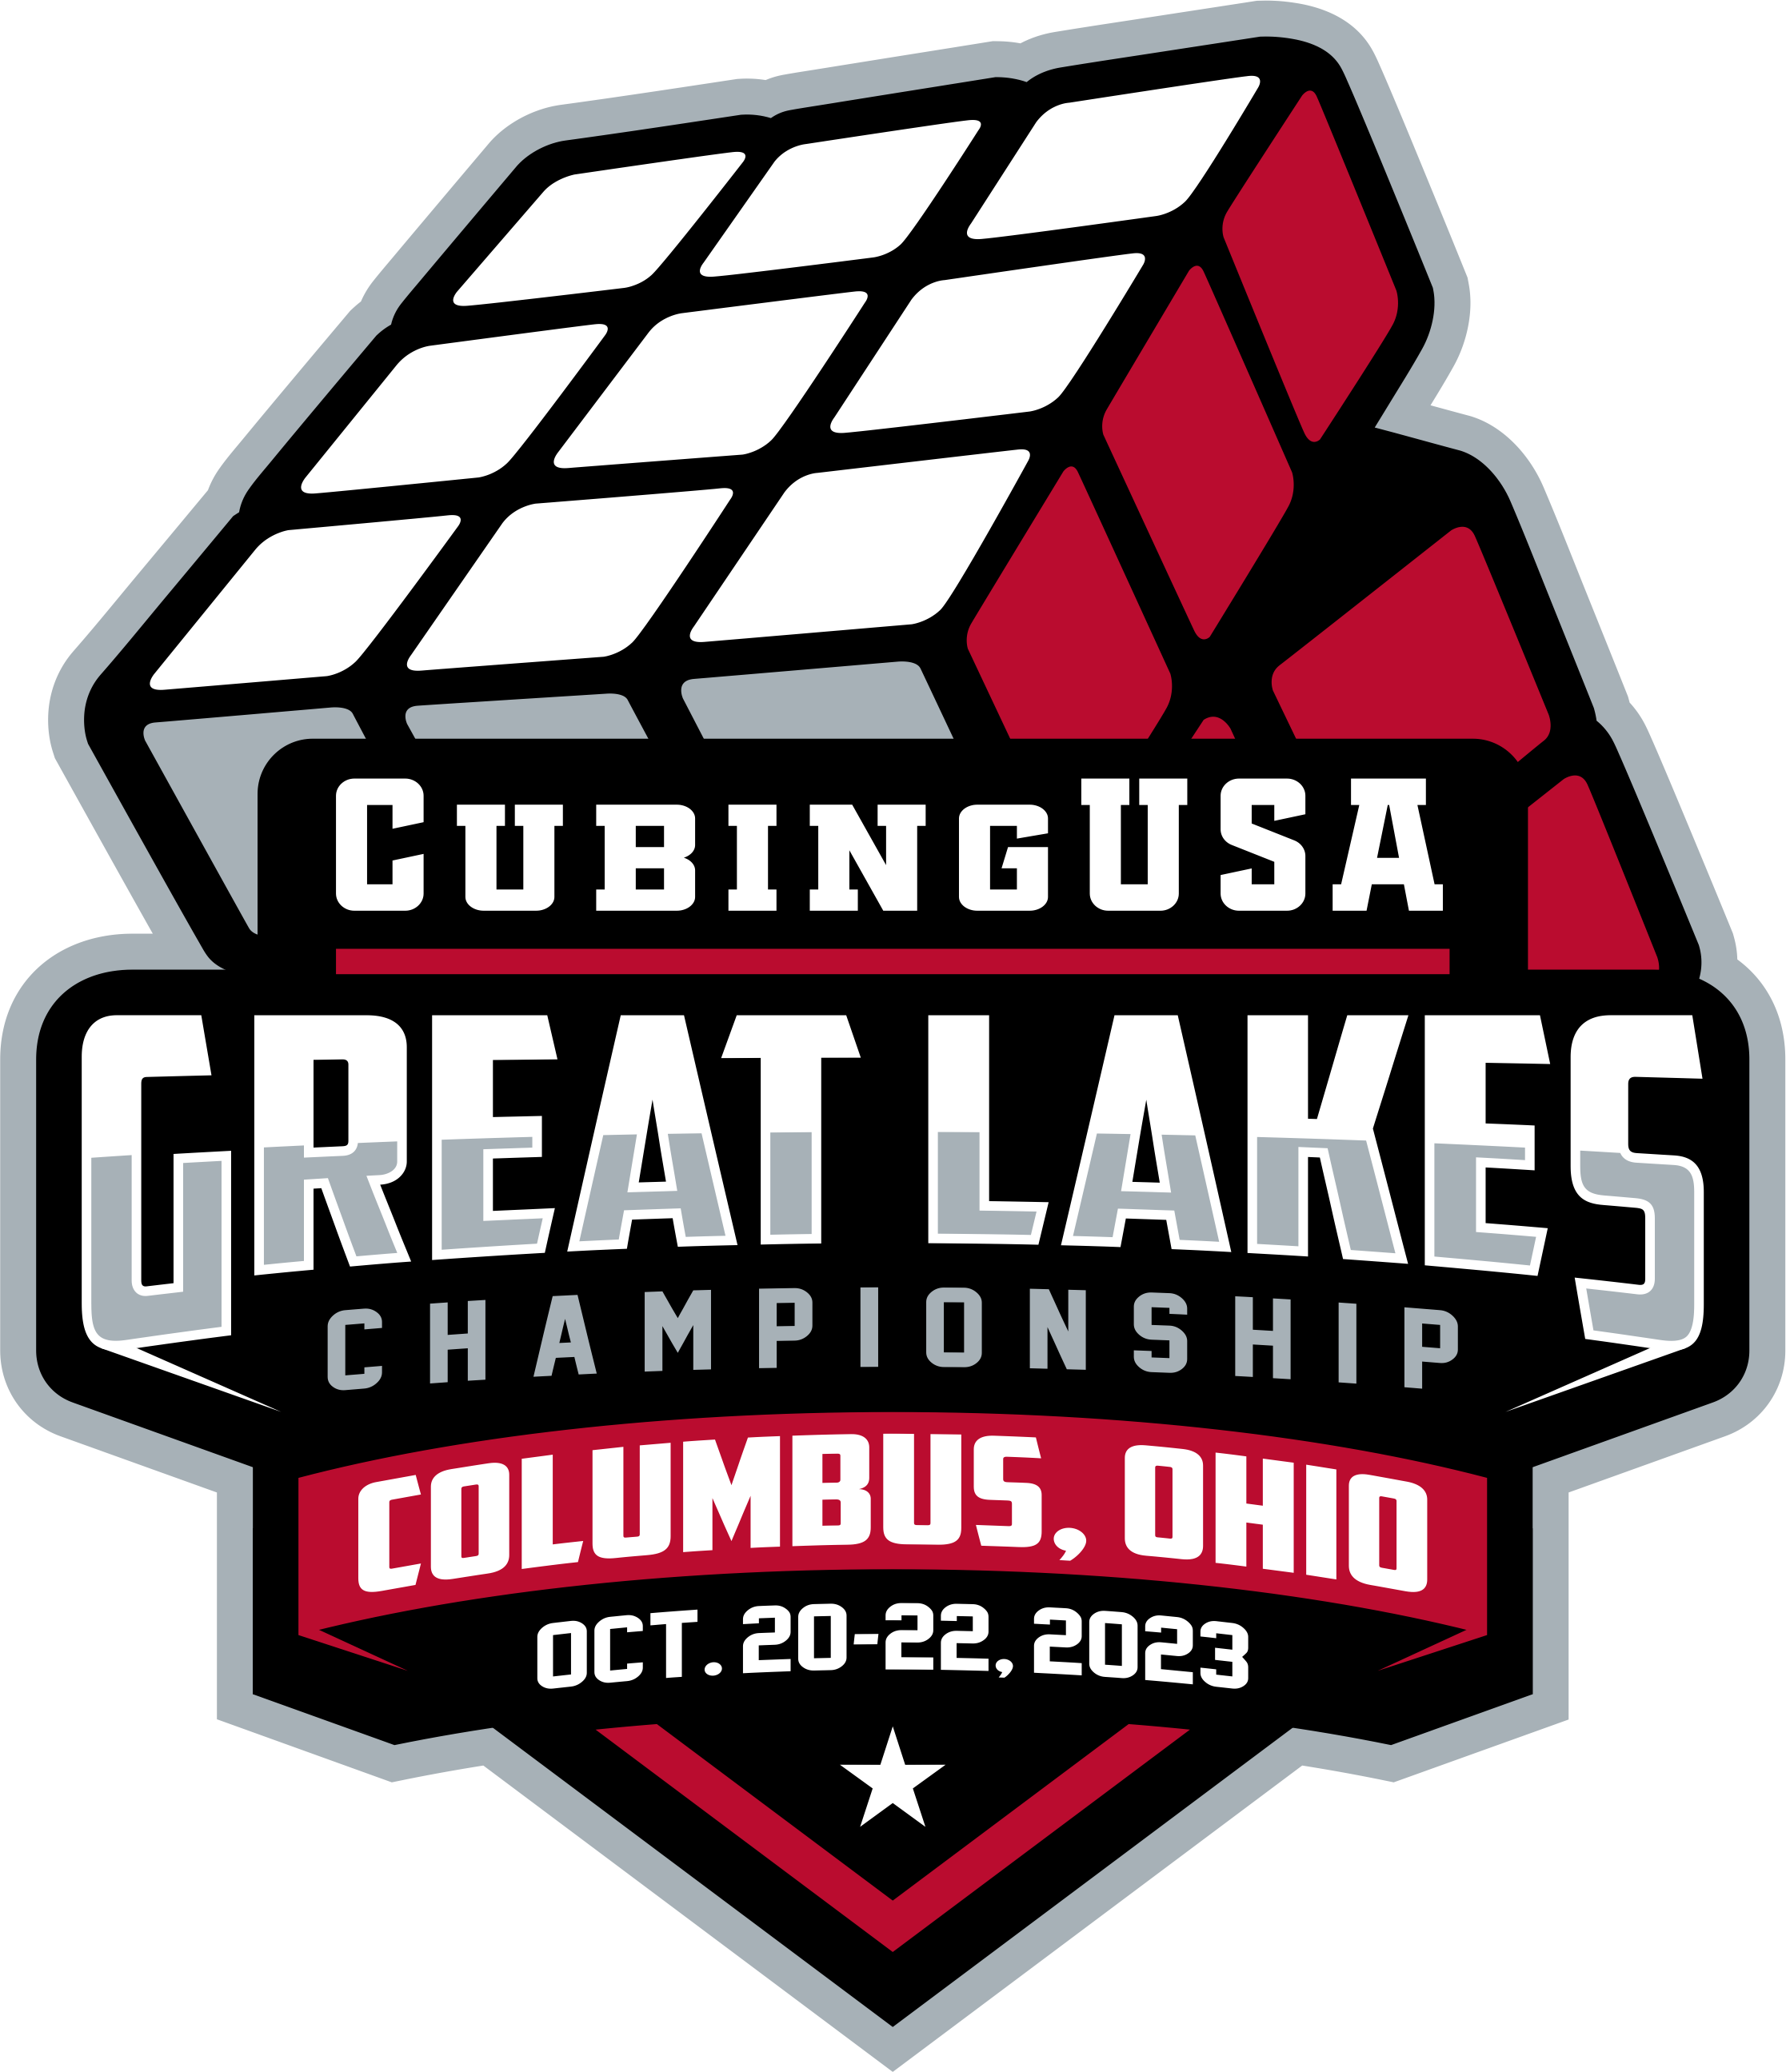 CubingUSA Great Lakes Championship 2023